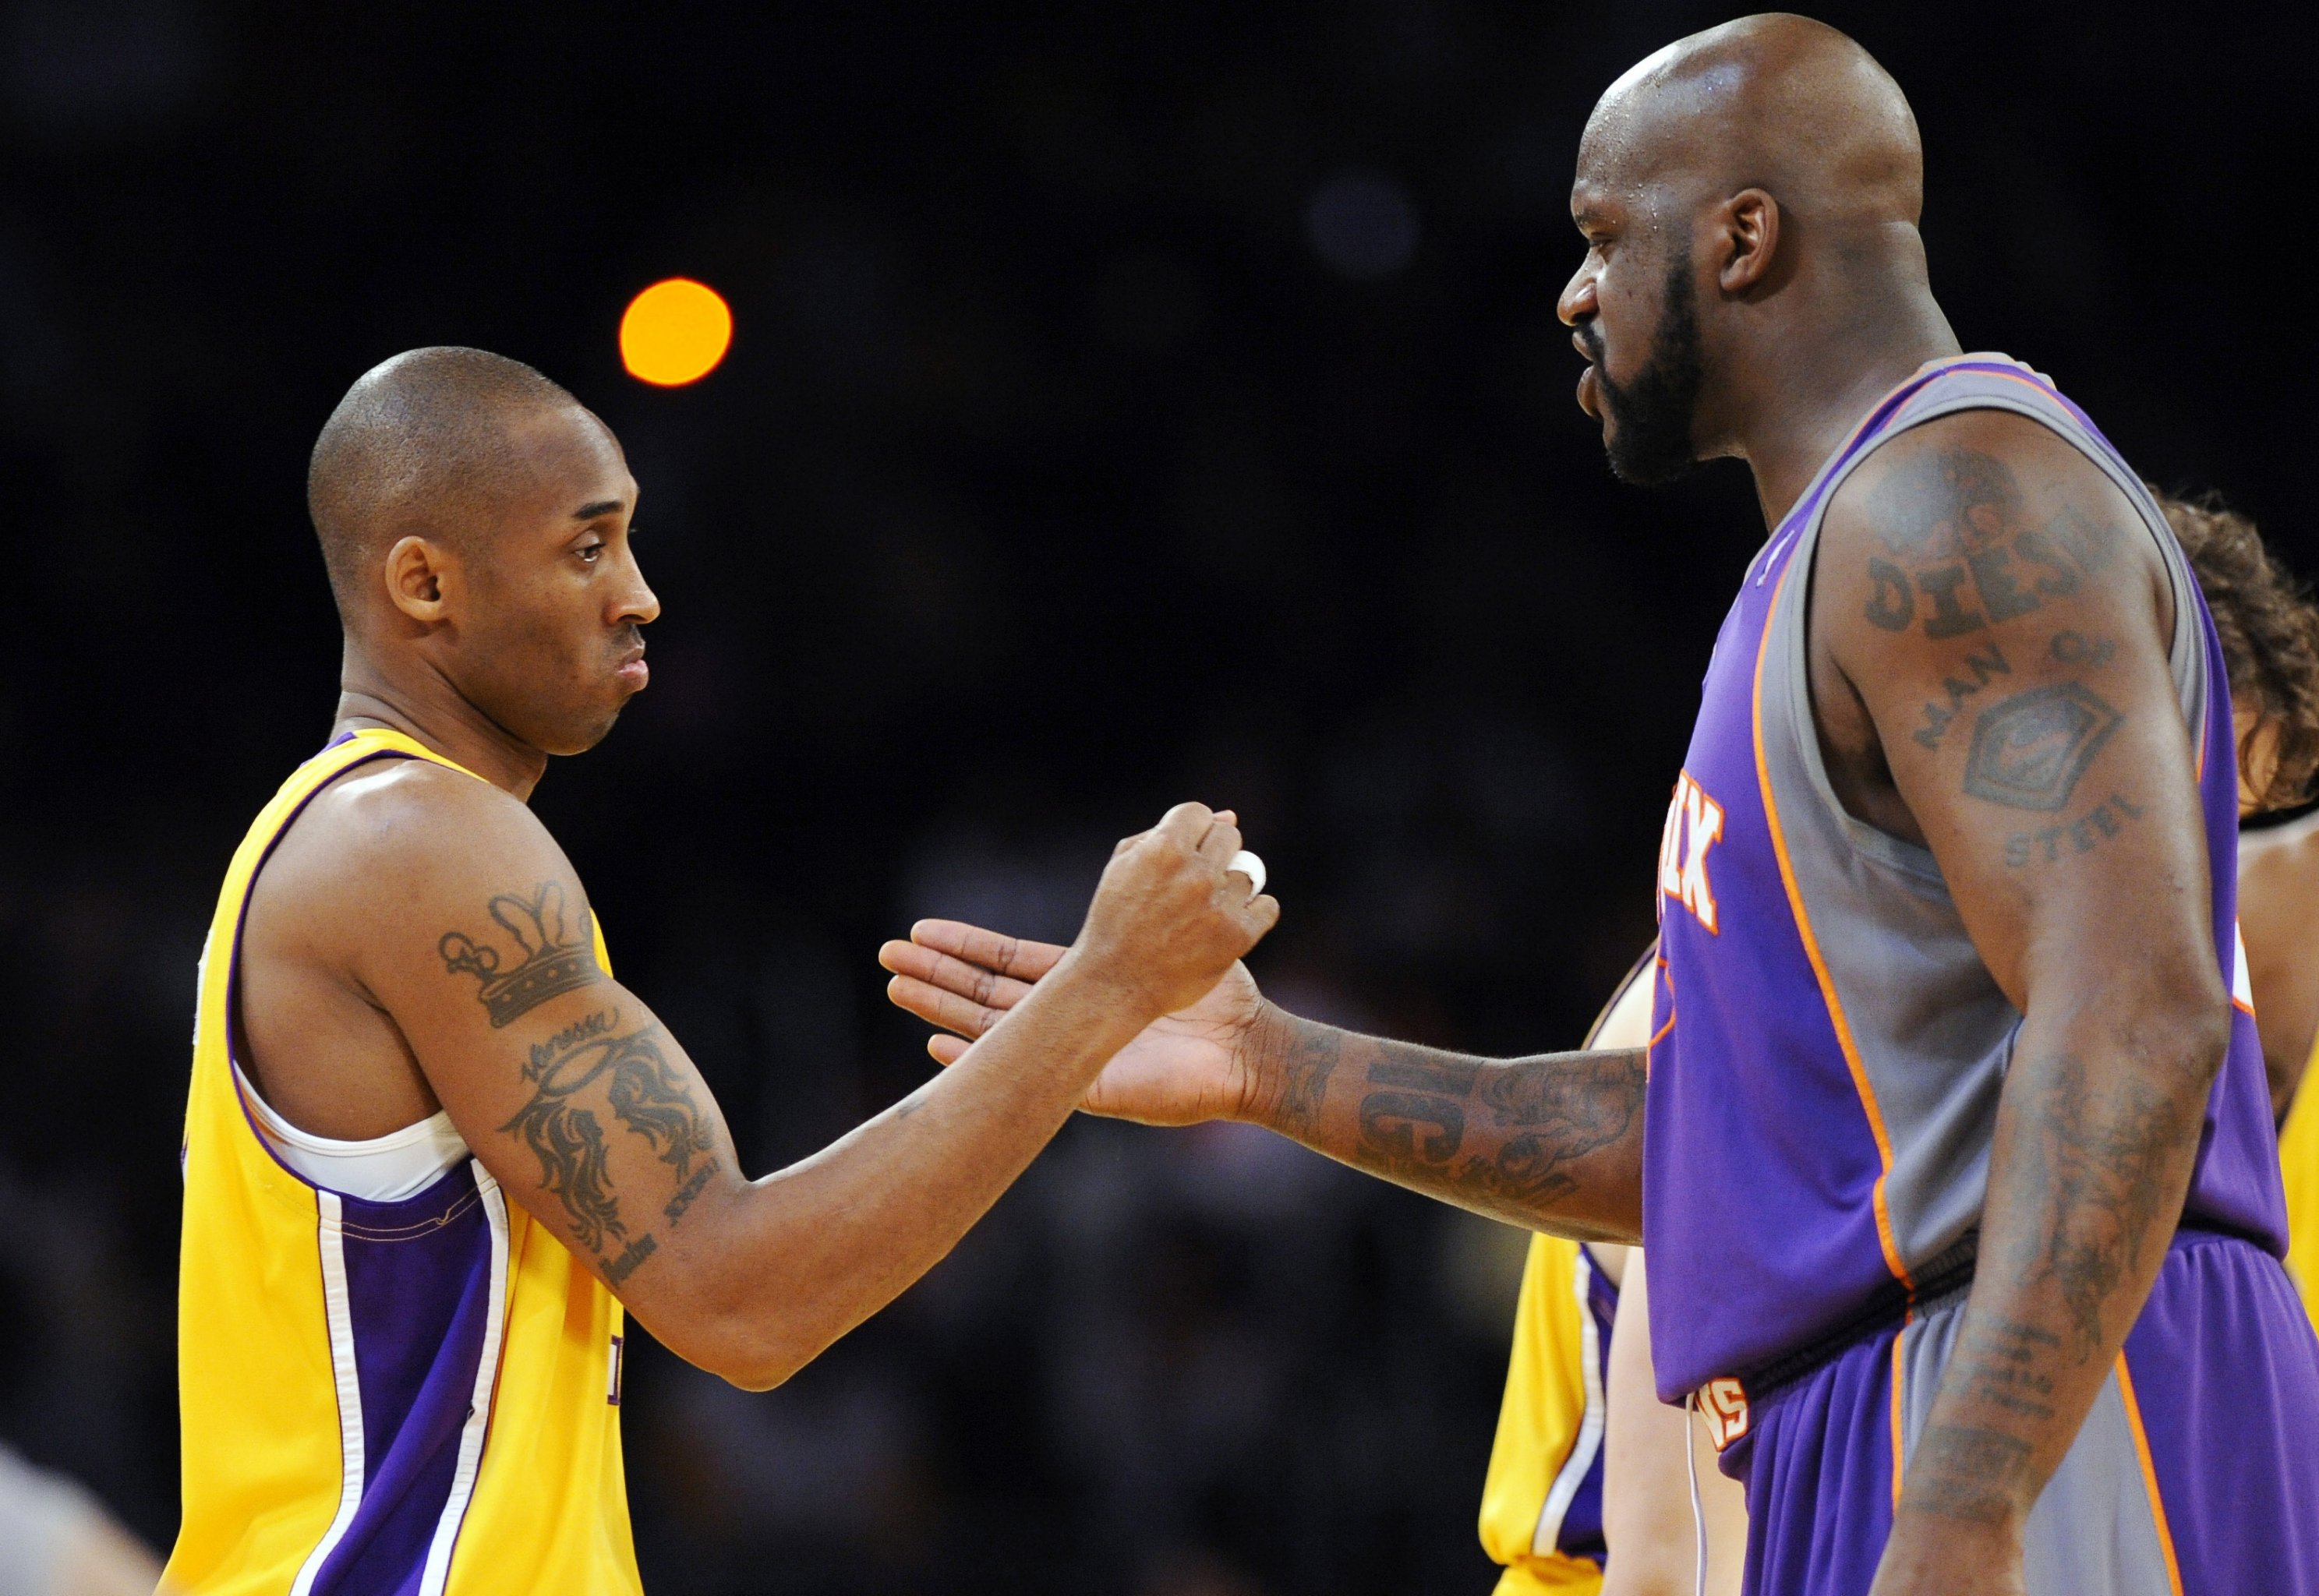 Shaq or Kobe: Who had the better career?